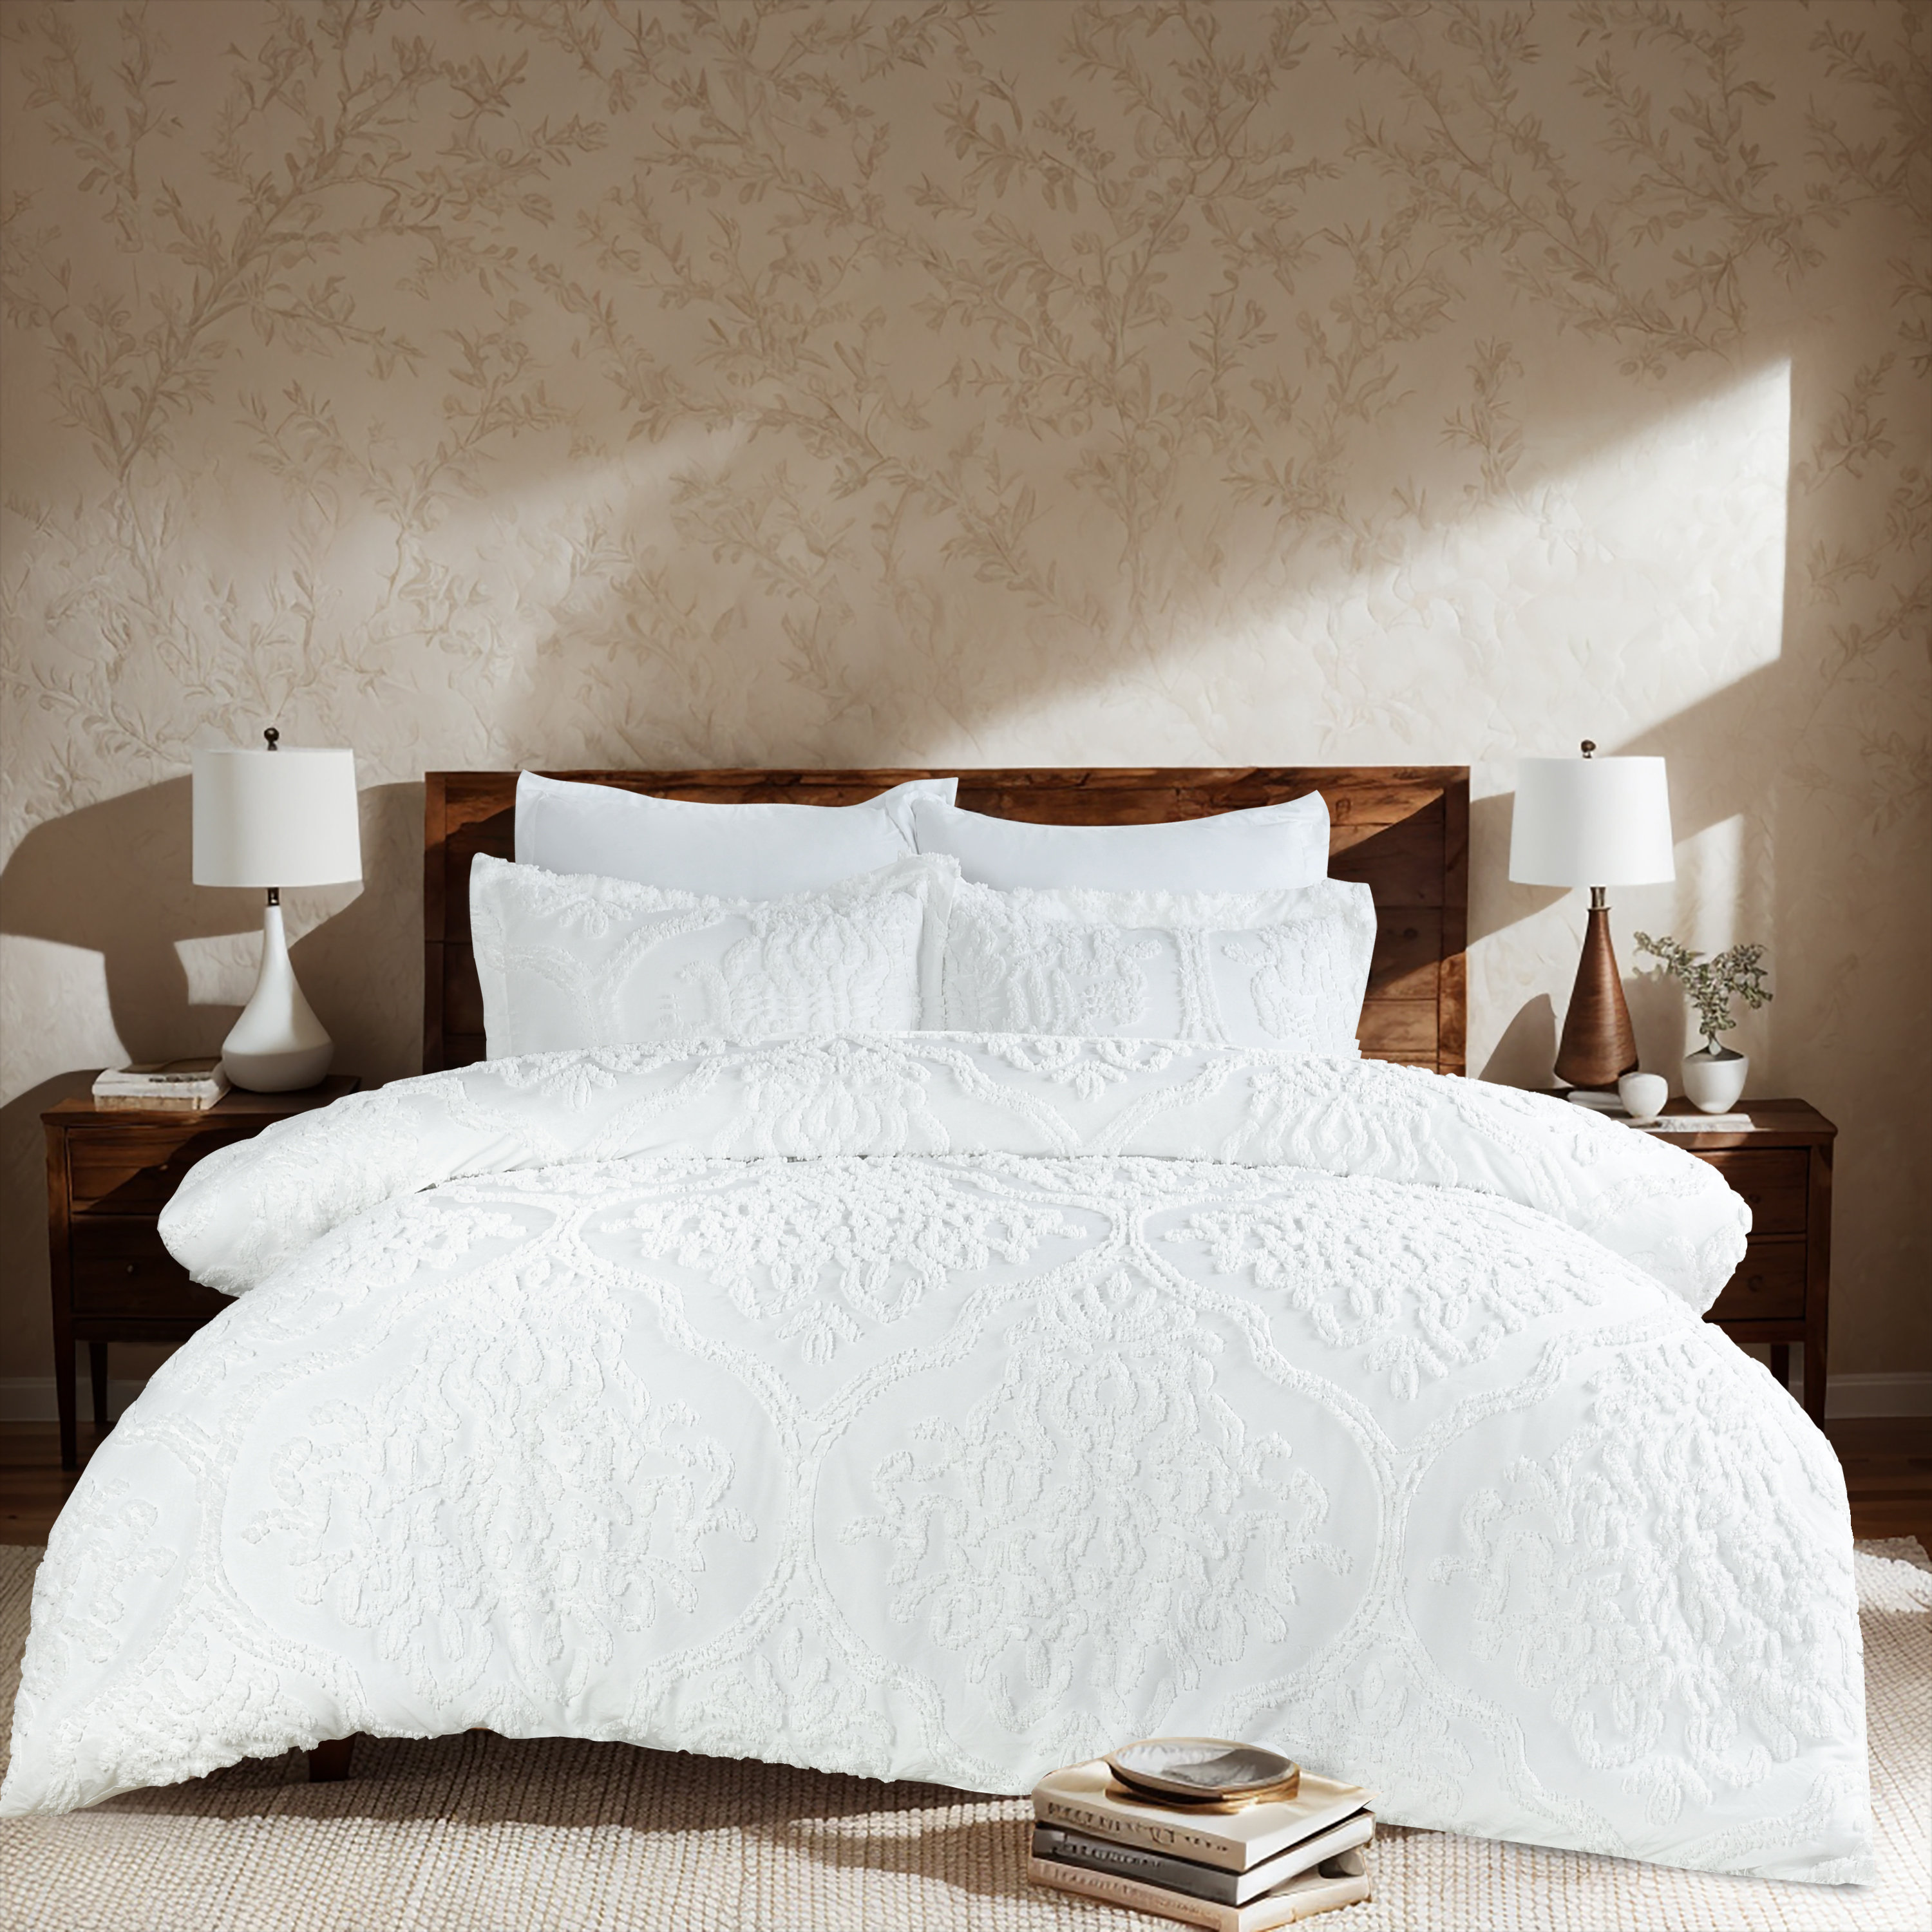 Suniya White Microfiber Reversible Comforter Set Jacquard & Tufted